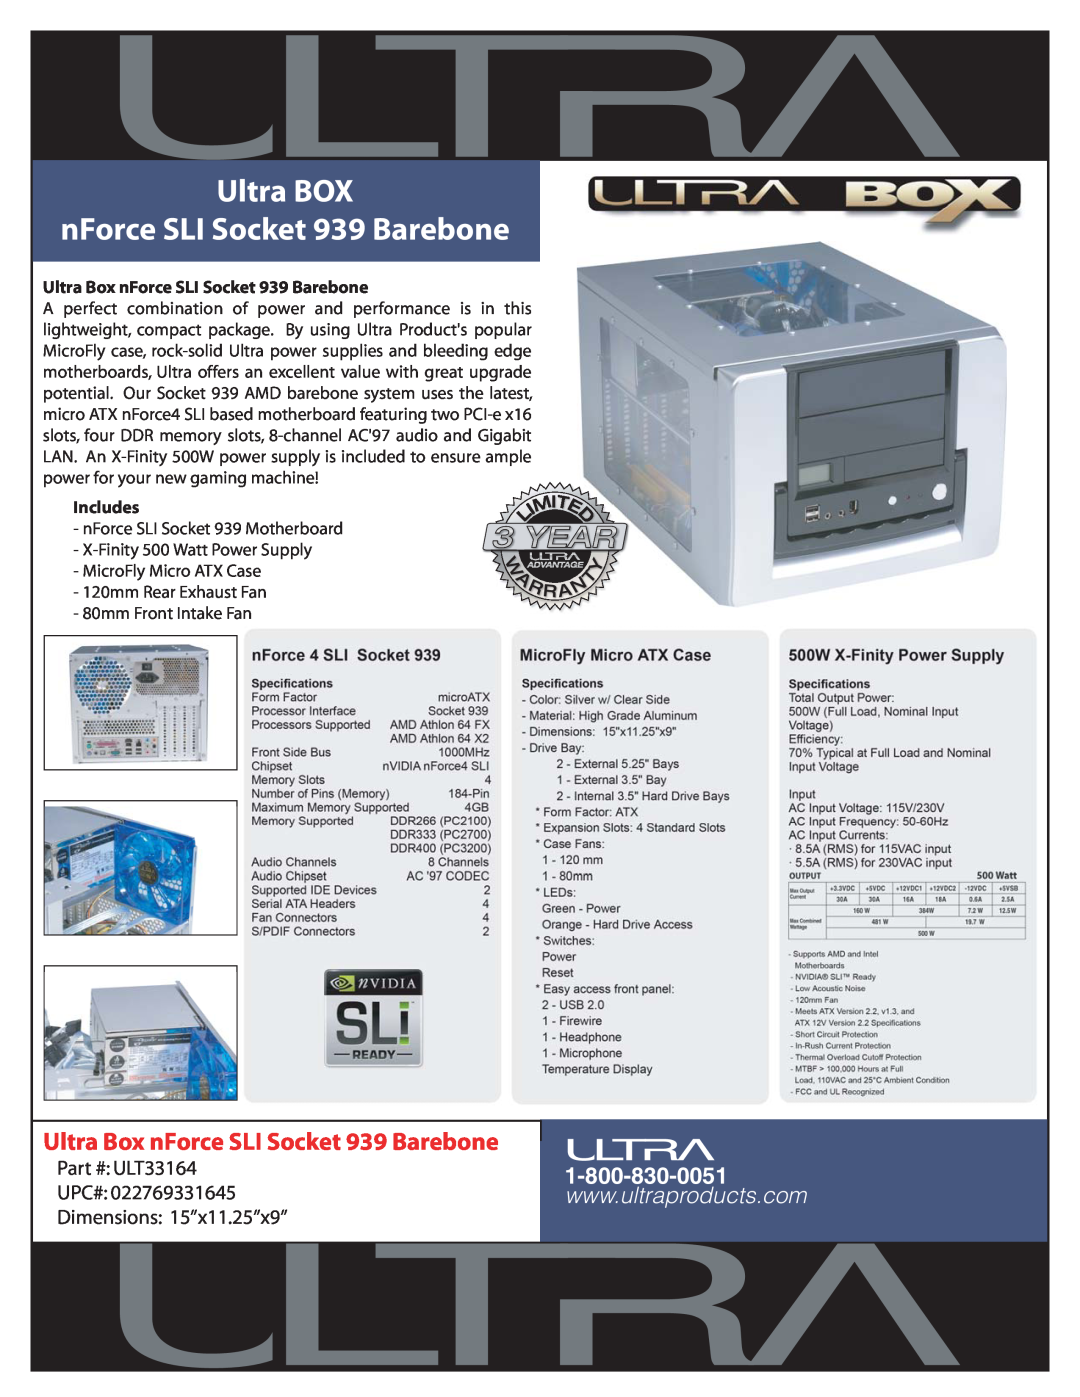 Ultra Products dimensions Ultra BOX nForce SLI Socket 939 Barebone, Ultra Box nForce SLI Socket 939 Barebone, ULT33164 